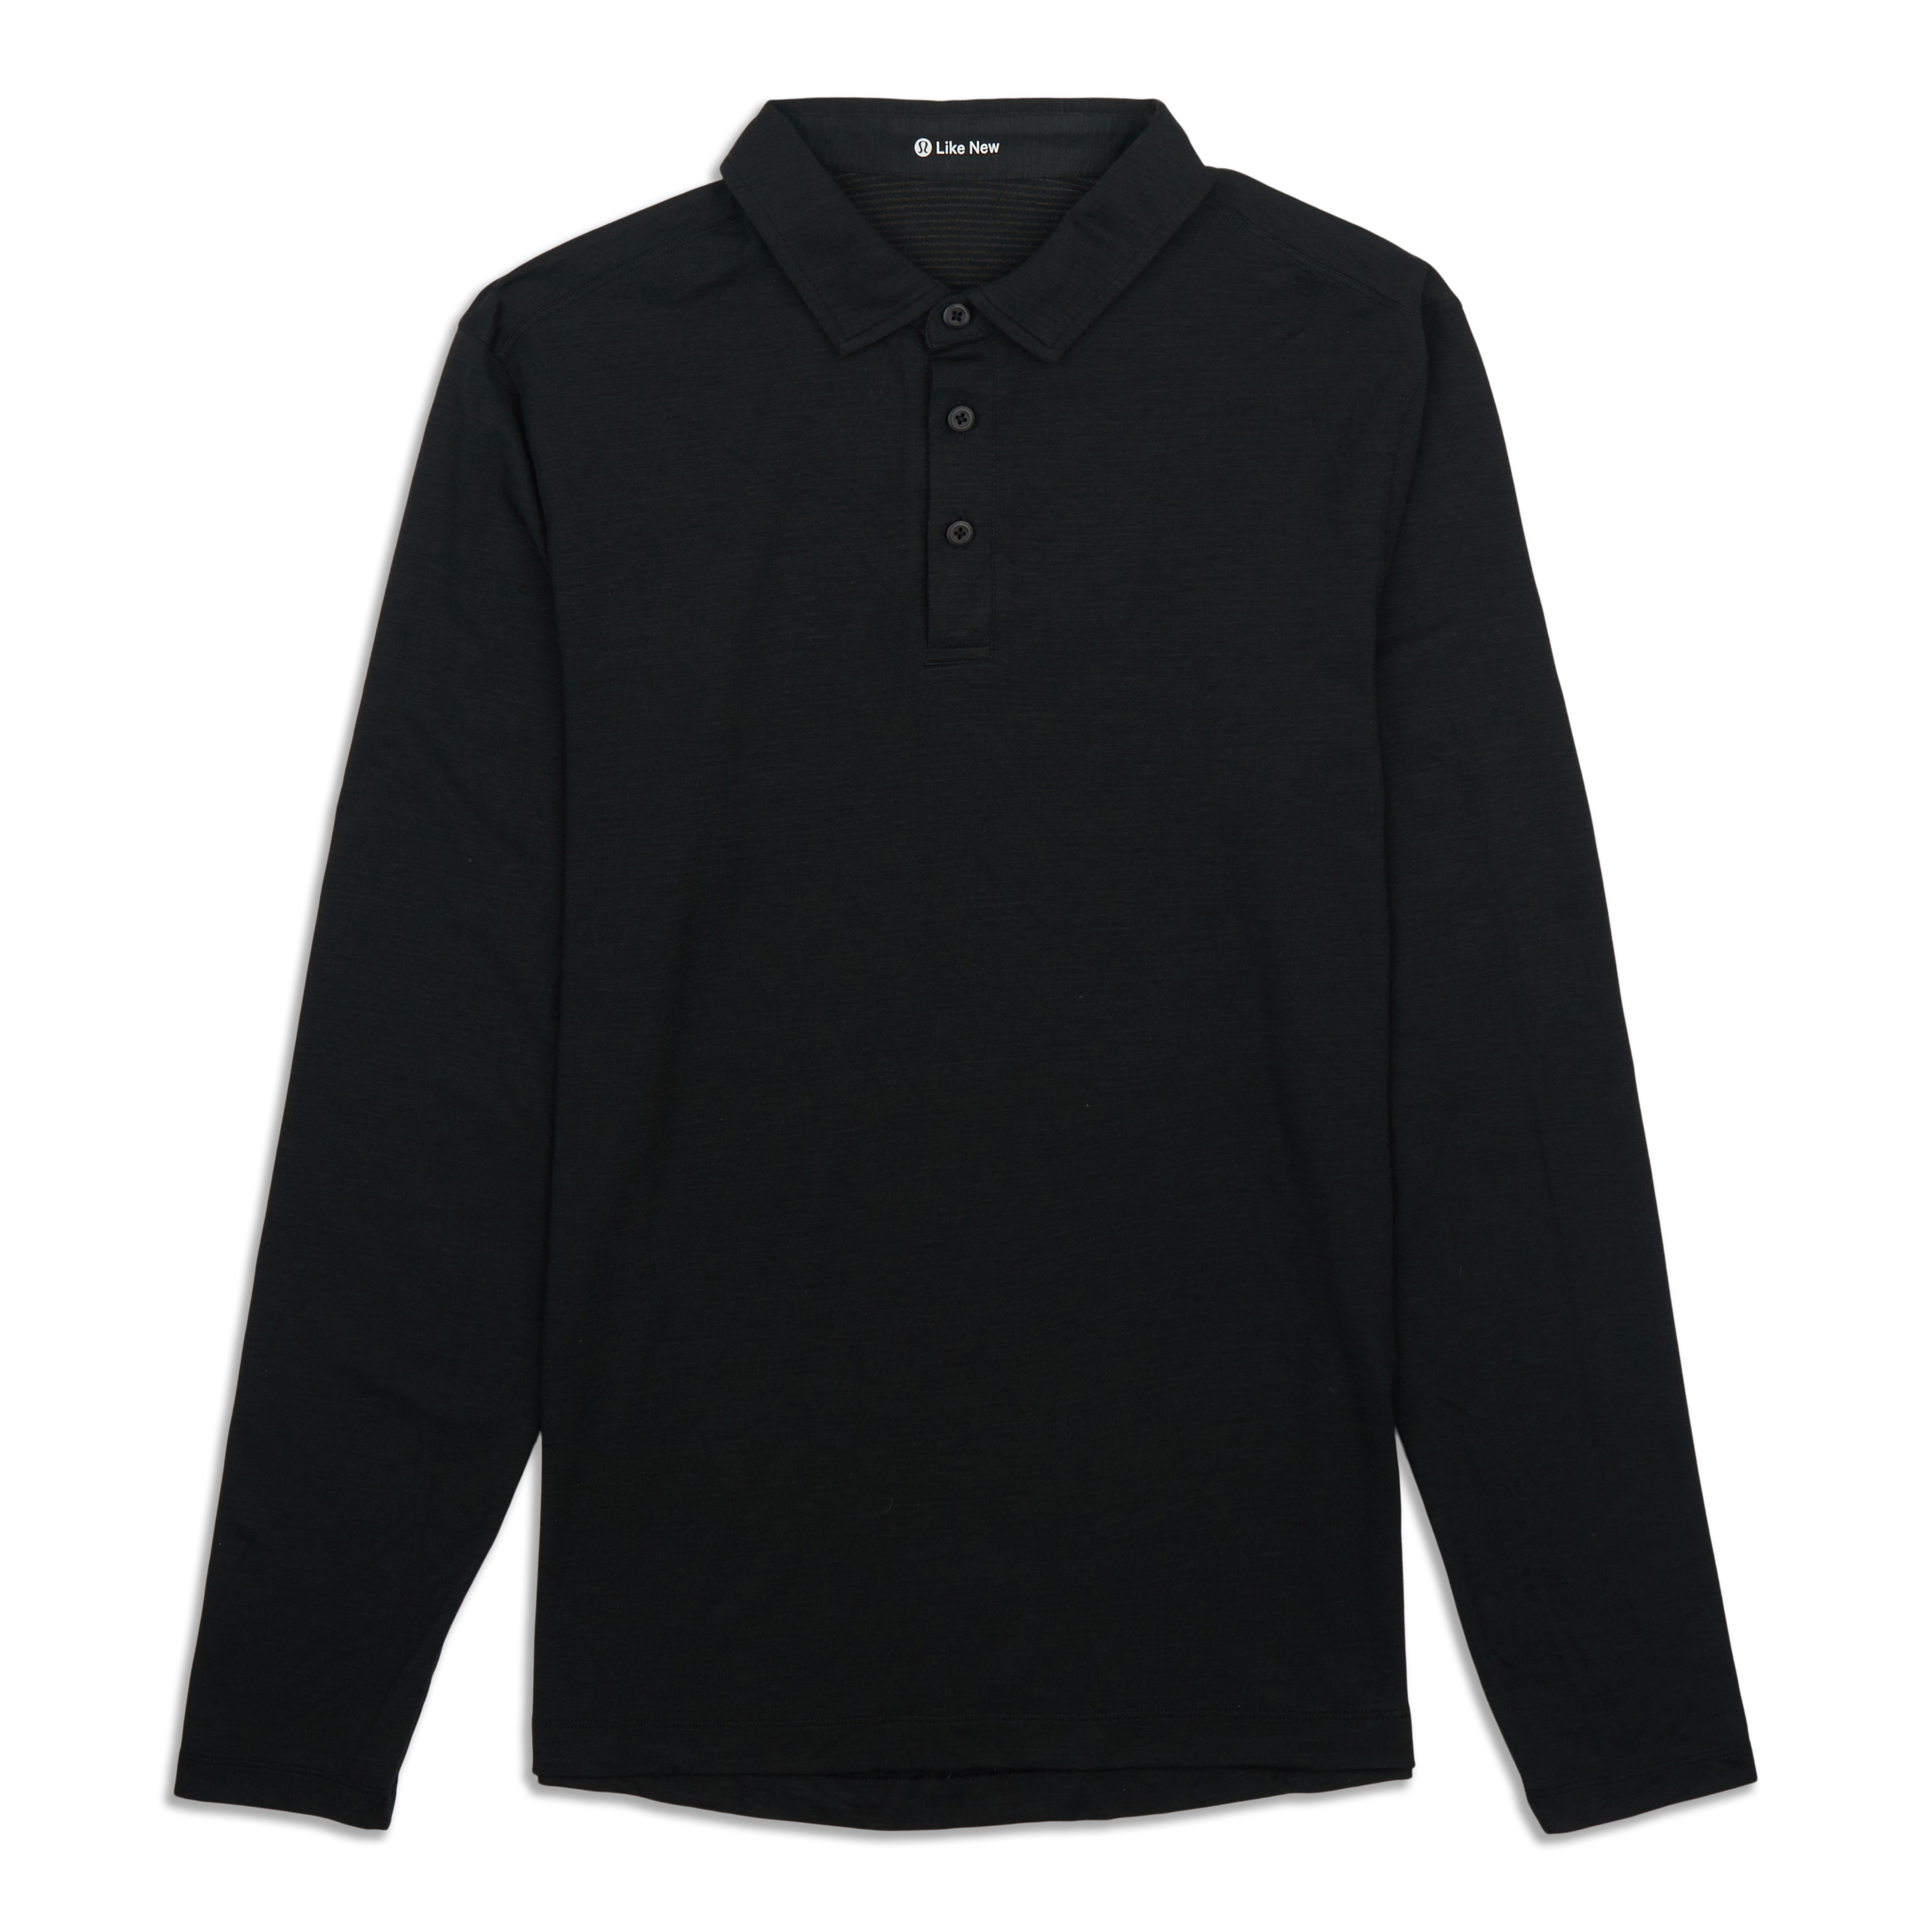 Lululemon Athletica CA 35801 RN 106259 A6 Size M Black Long Sleeve Shirt